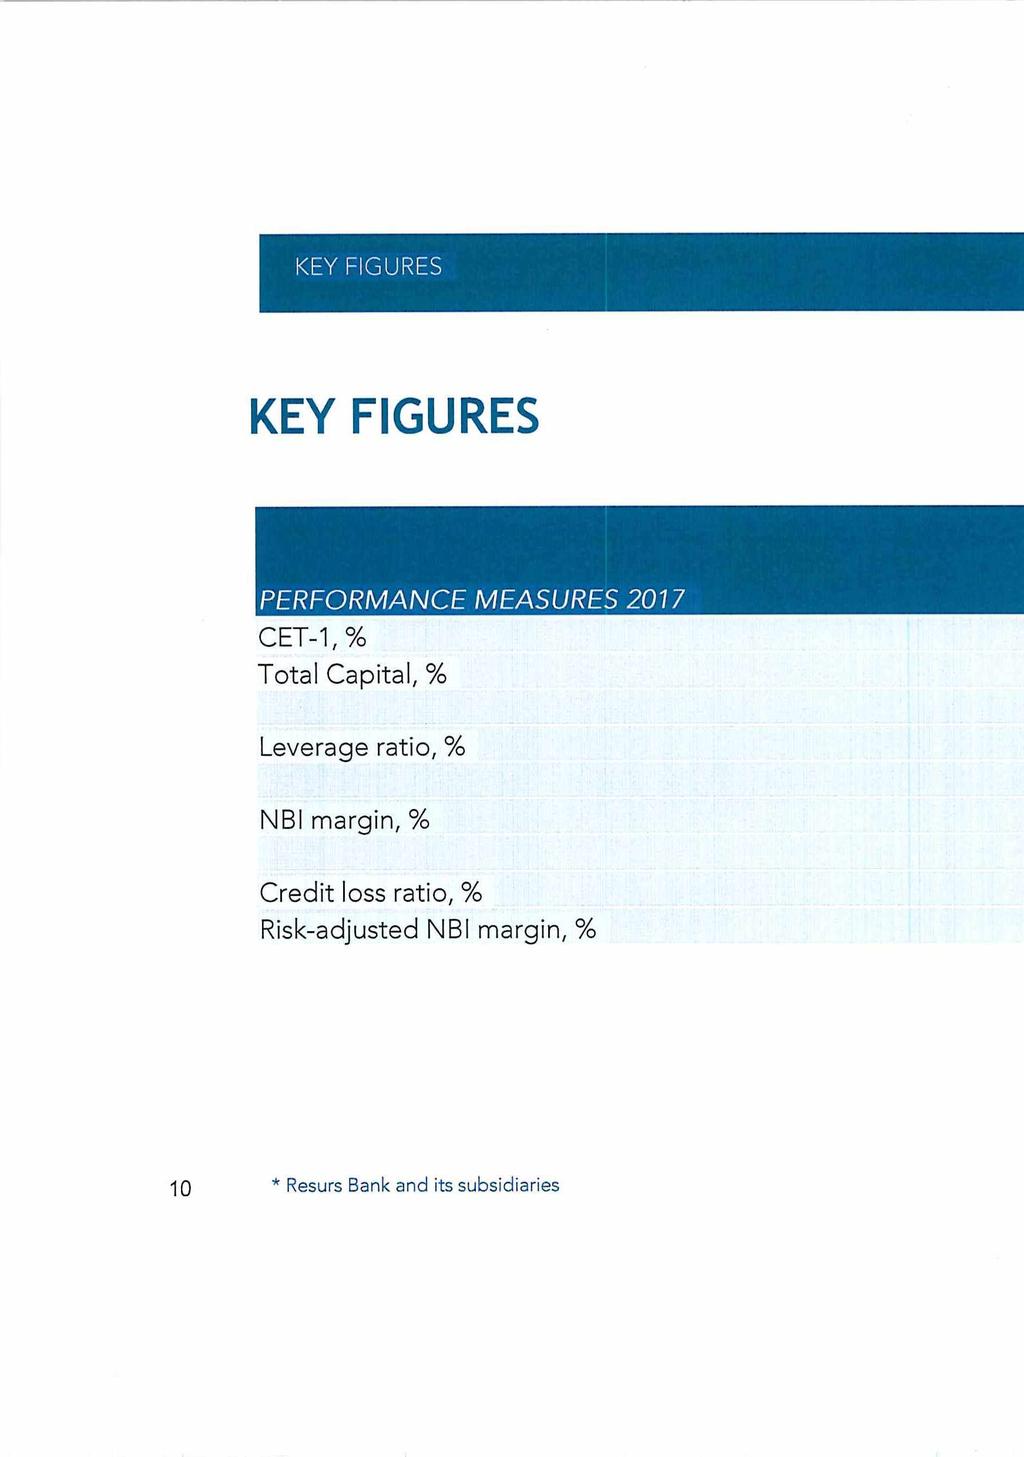 KEY FIGURES KEY FIGURES PERFO RM ANCE MEASURES 2017 CET-1,% Total Capital, % Leverage ratio, %